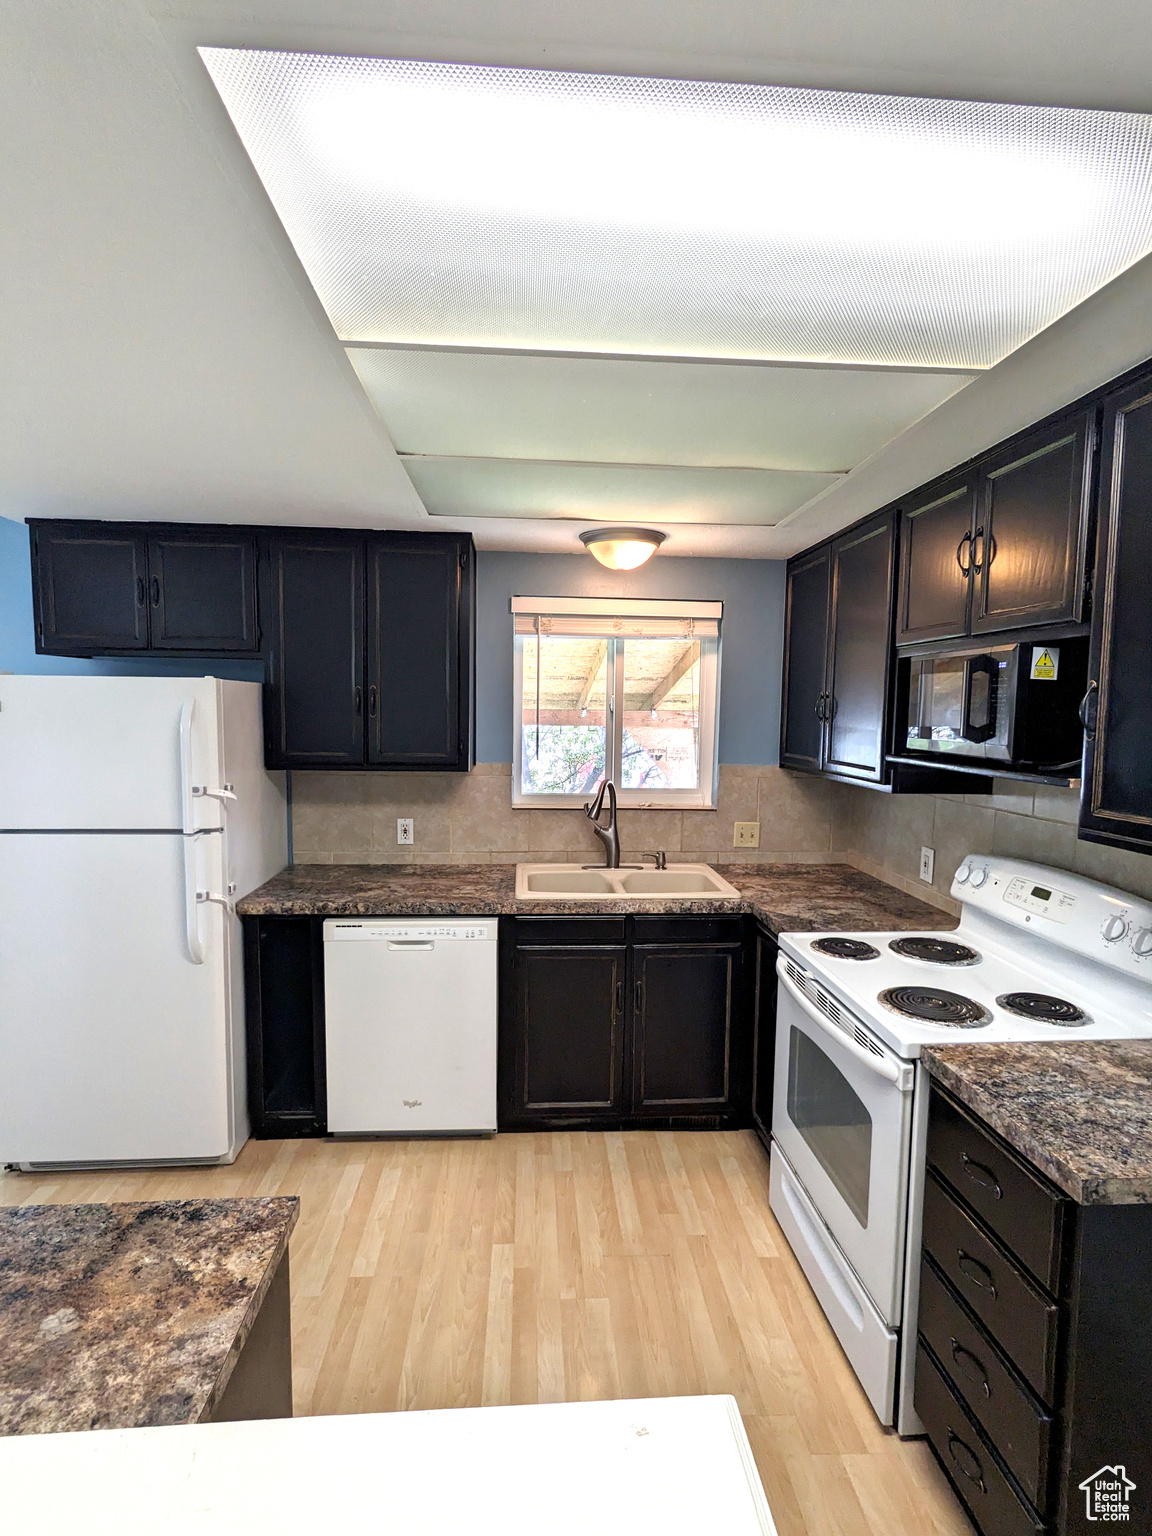 Kitchen with light hardwood / wood-style flooring, white appliances, tasteful backsplash, and sink